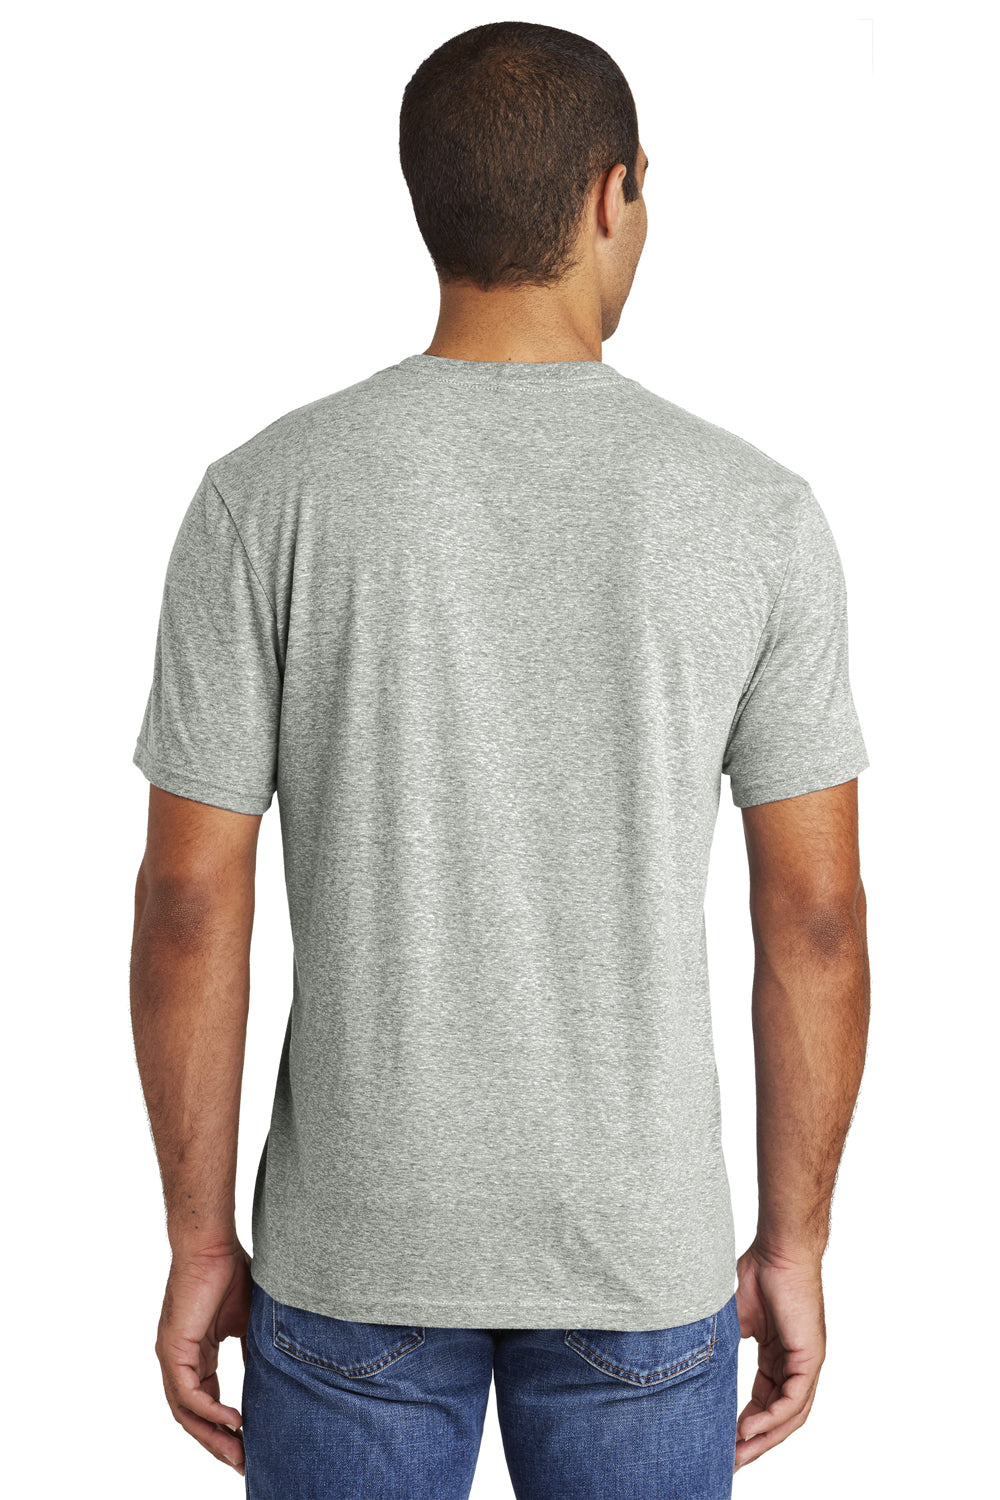 District DT365A Mens Astro Short Sleeve Crewneck T-Shirt Grey Back